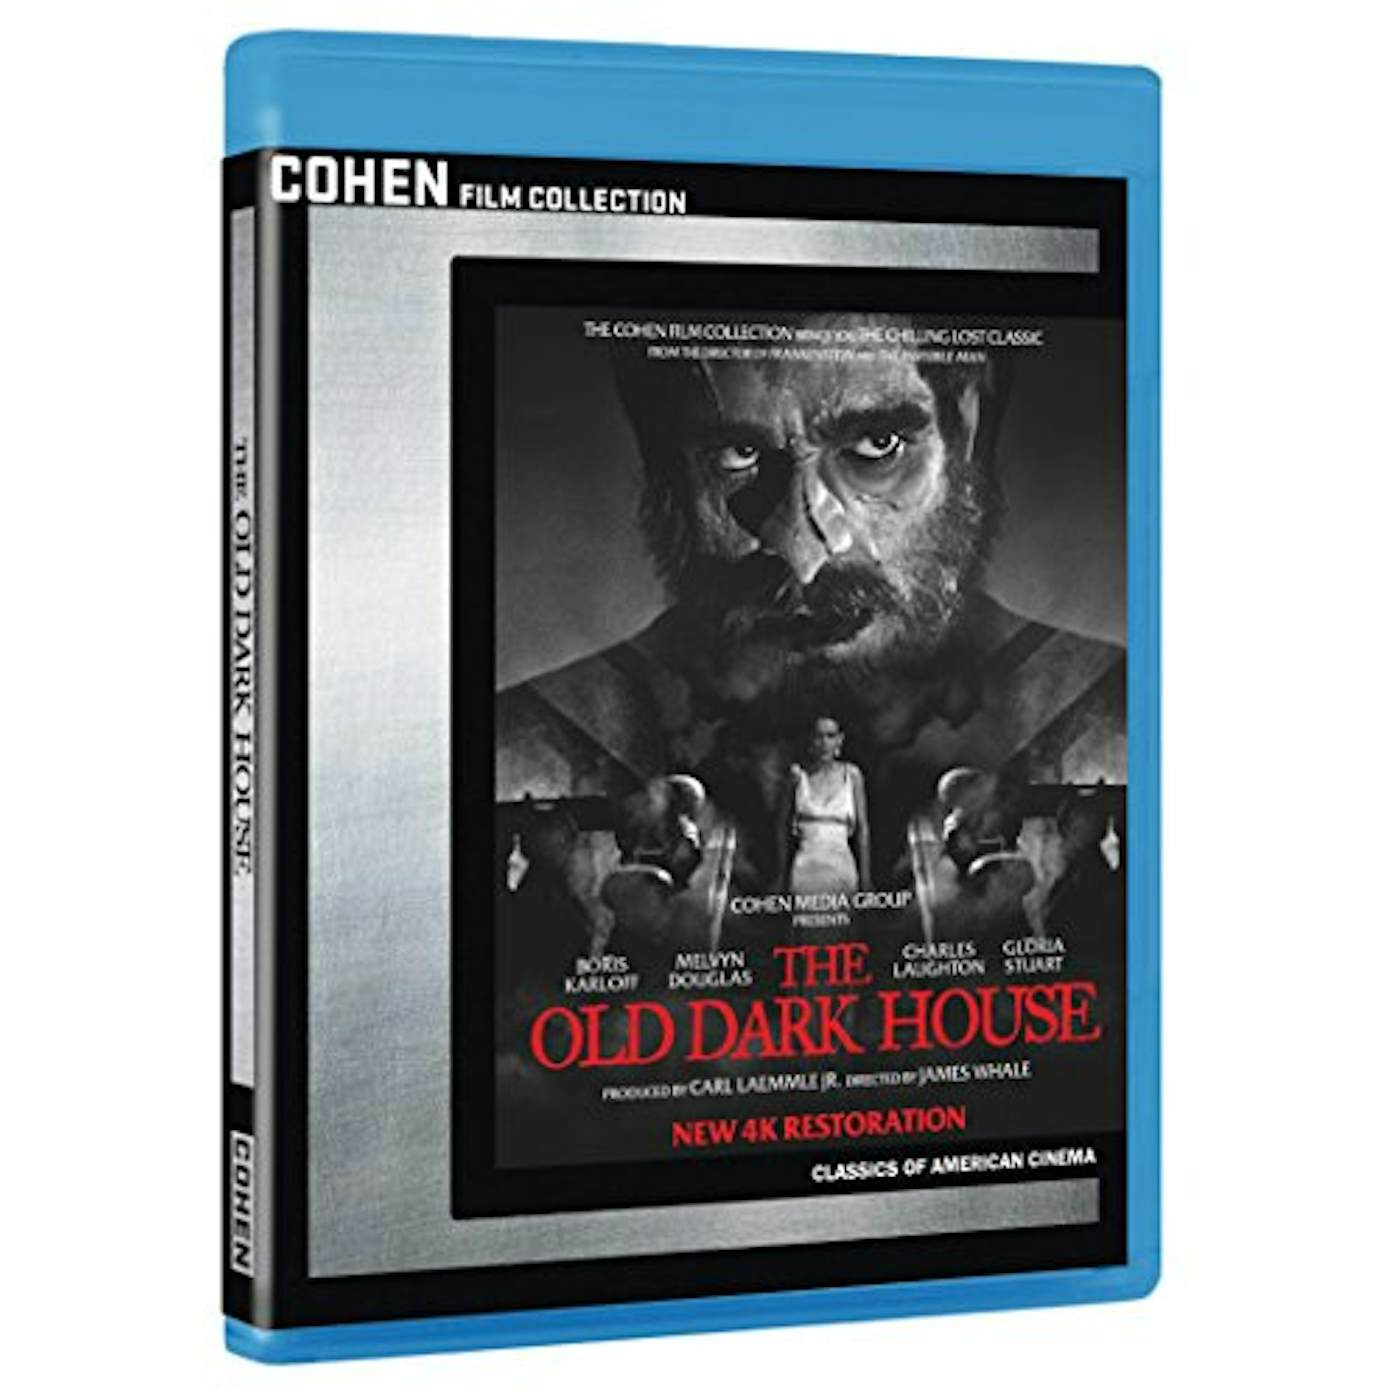 OLD DARK HOUSE (1932) Blu-ray